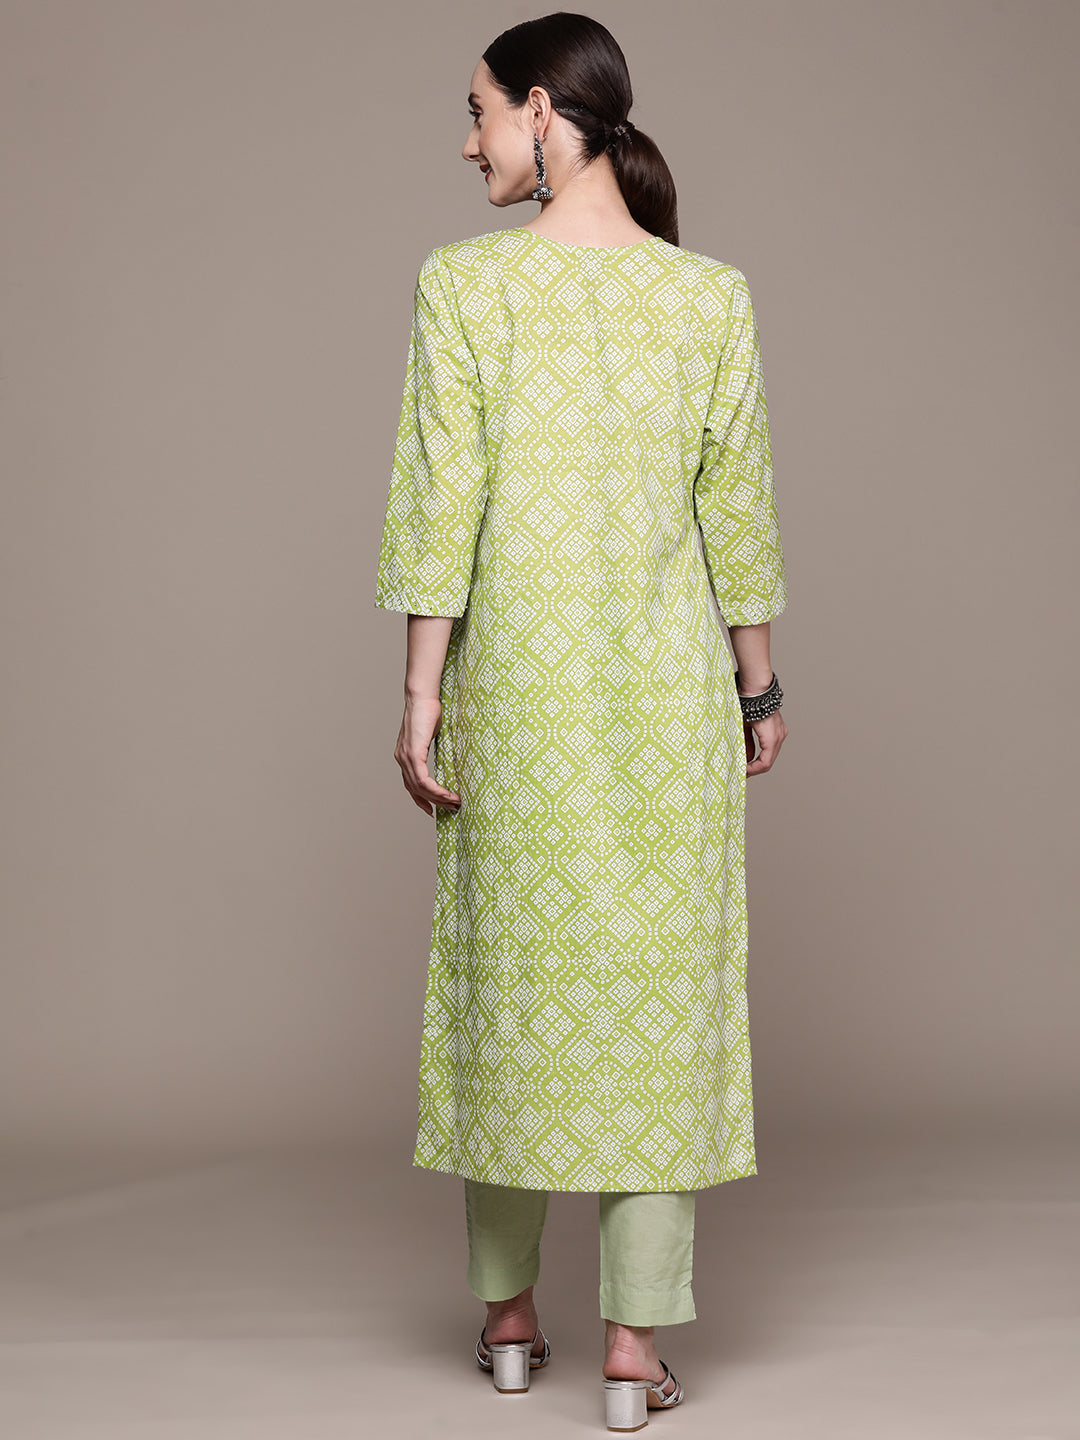 Ishin Women's Cotton Blend Green Bandhani Printed A-Line Kurta